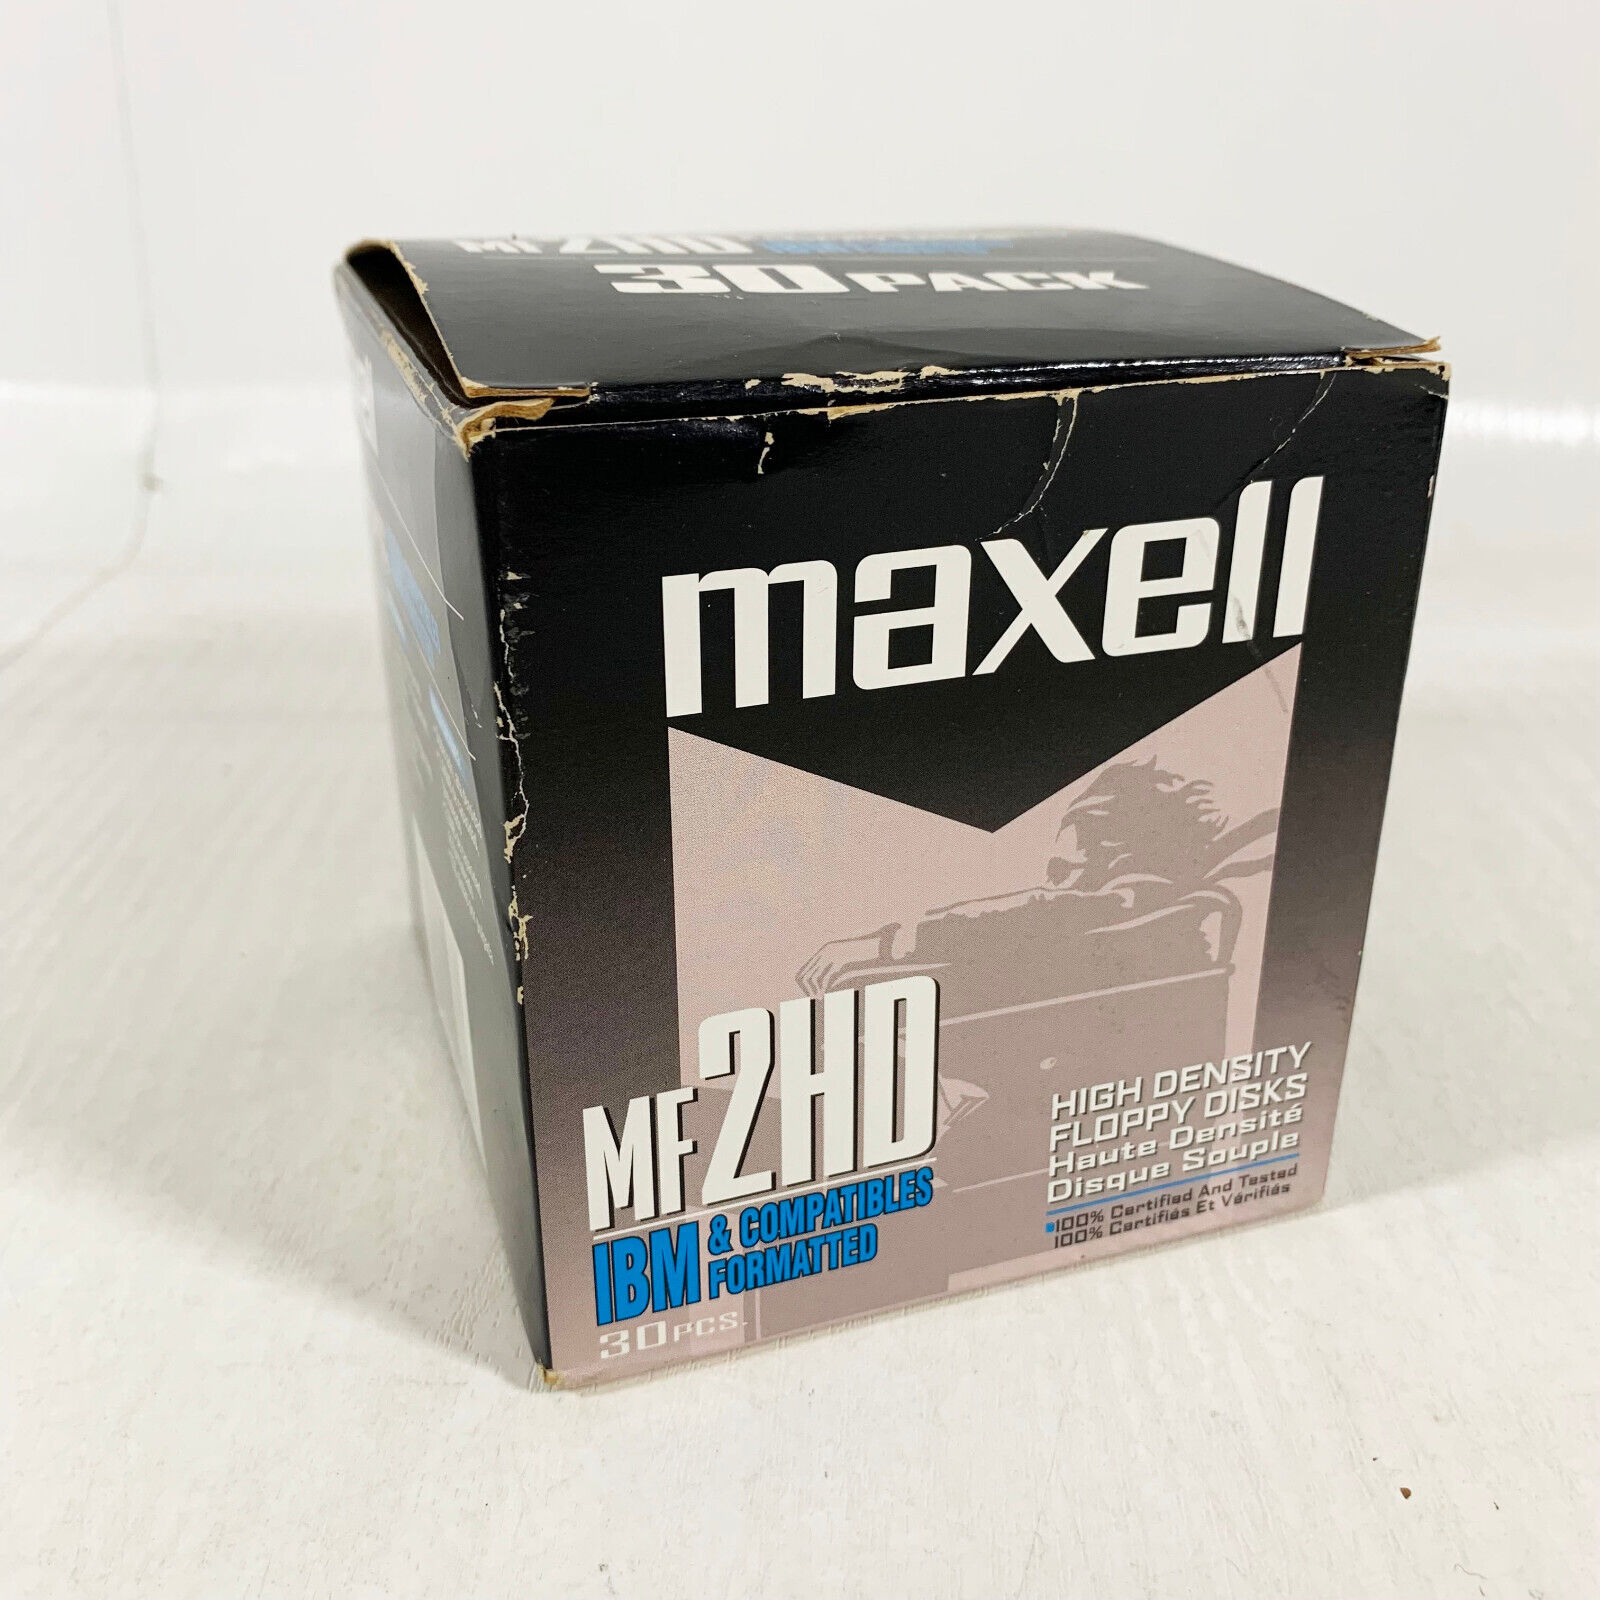 [NEW] Pack of (24) Maxell MF 2HD High Density Floppy Disks